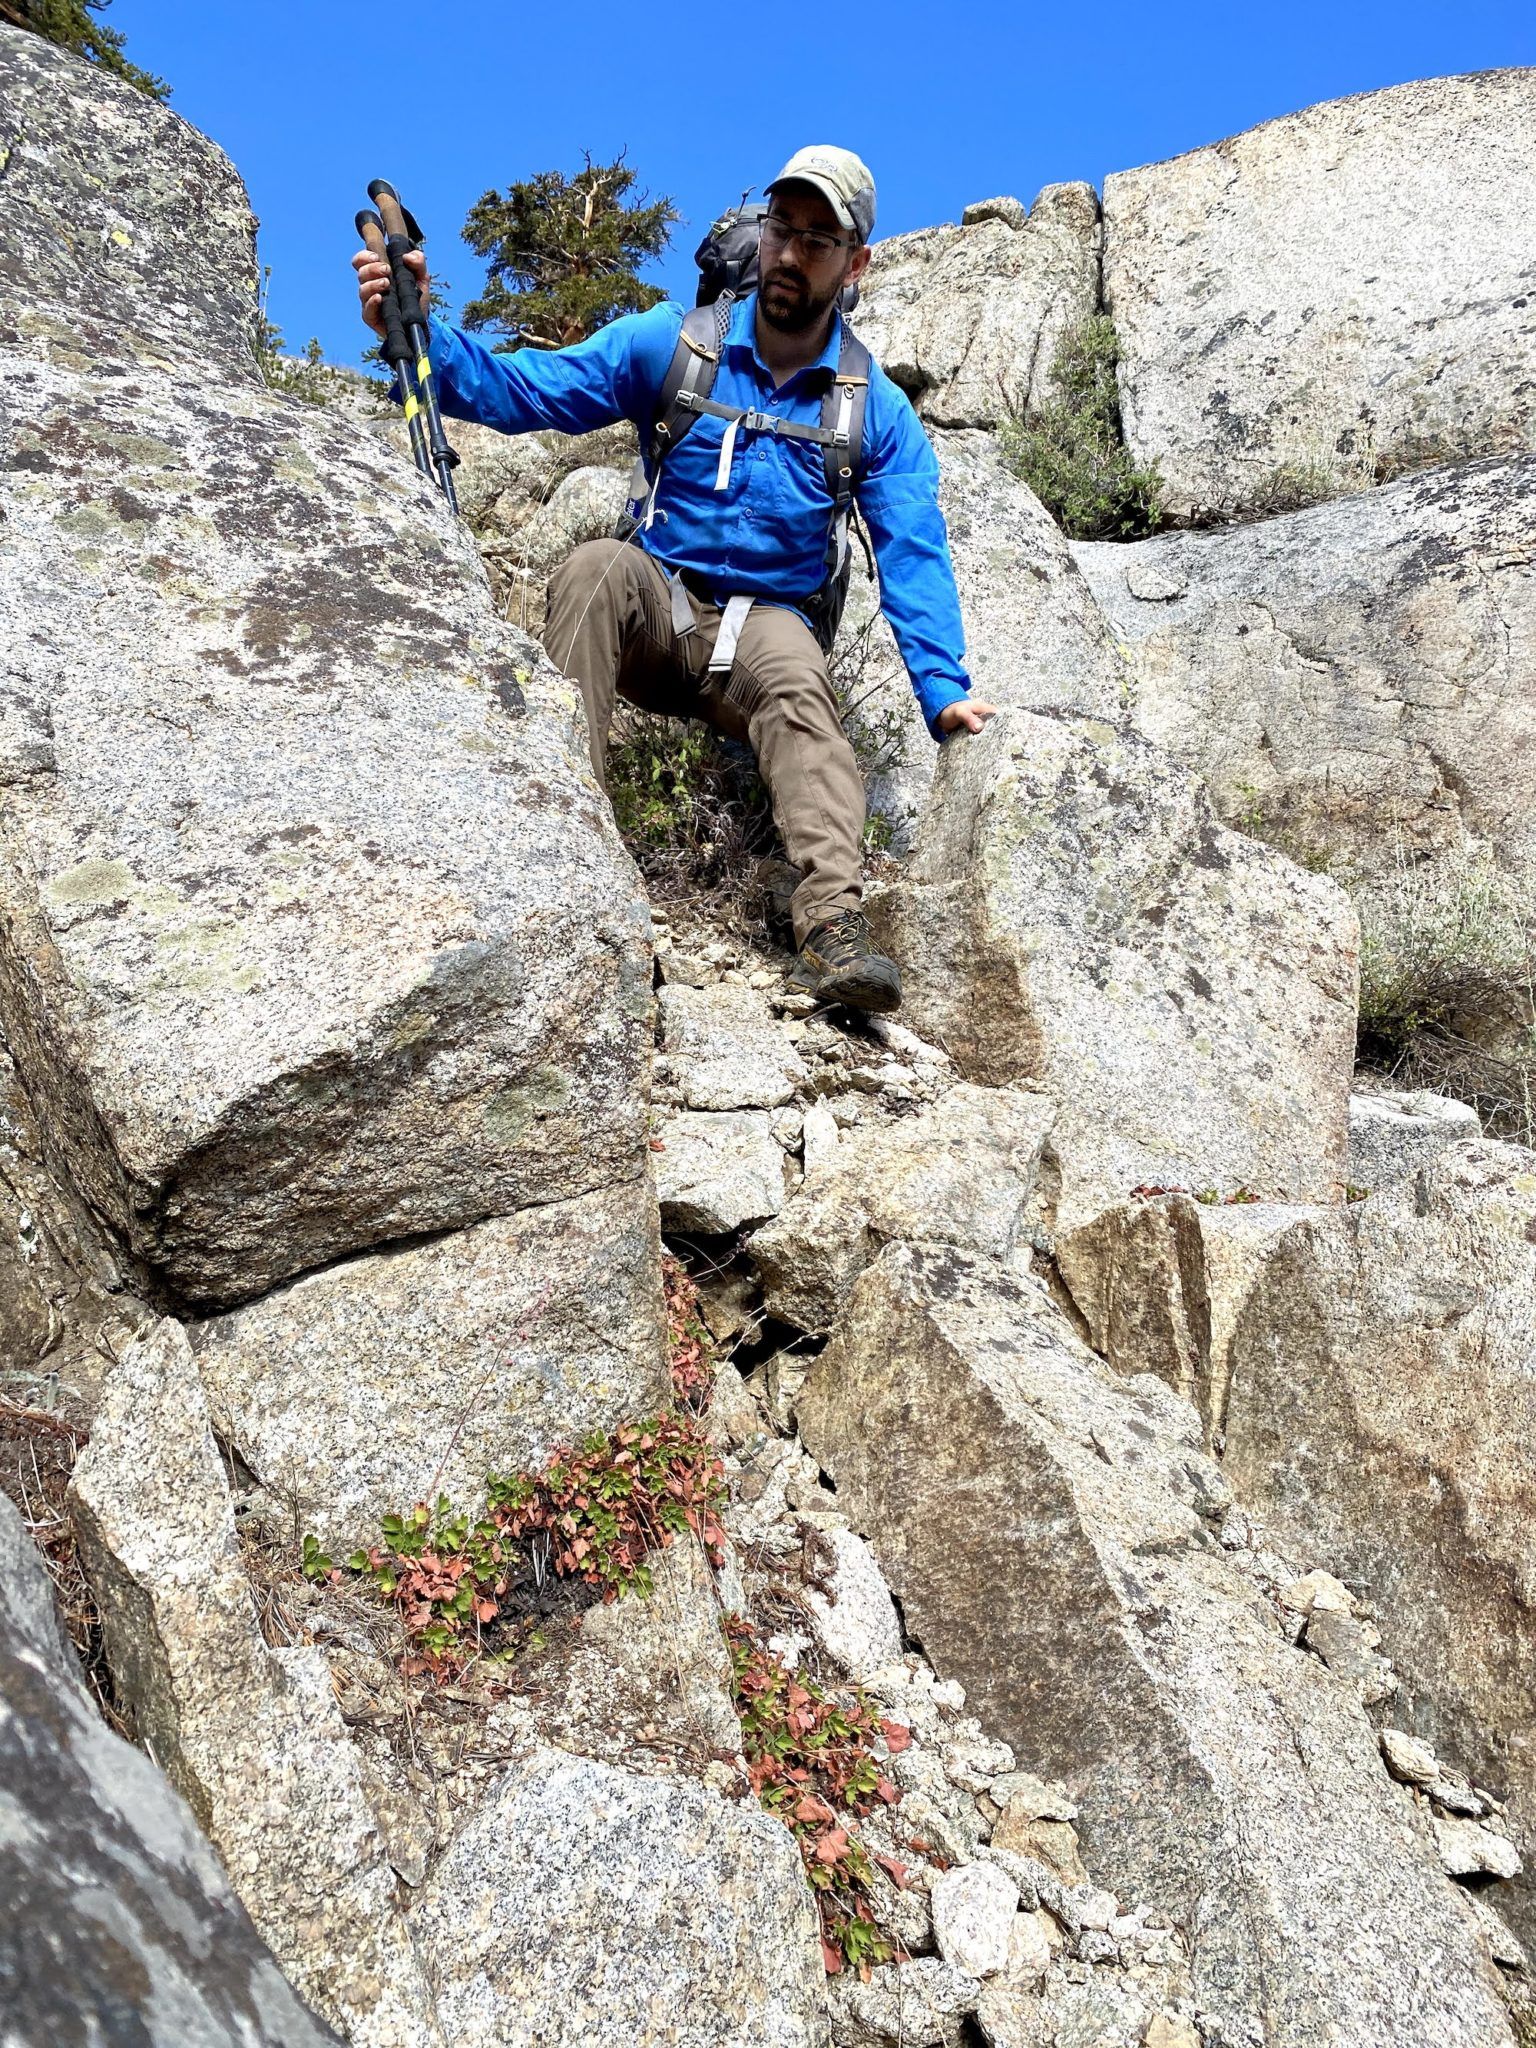 A man climbing down rocks